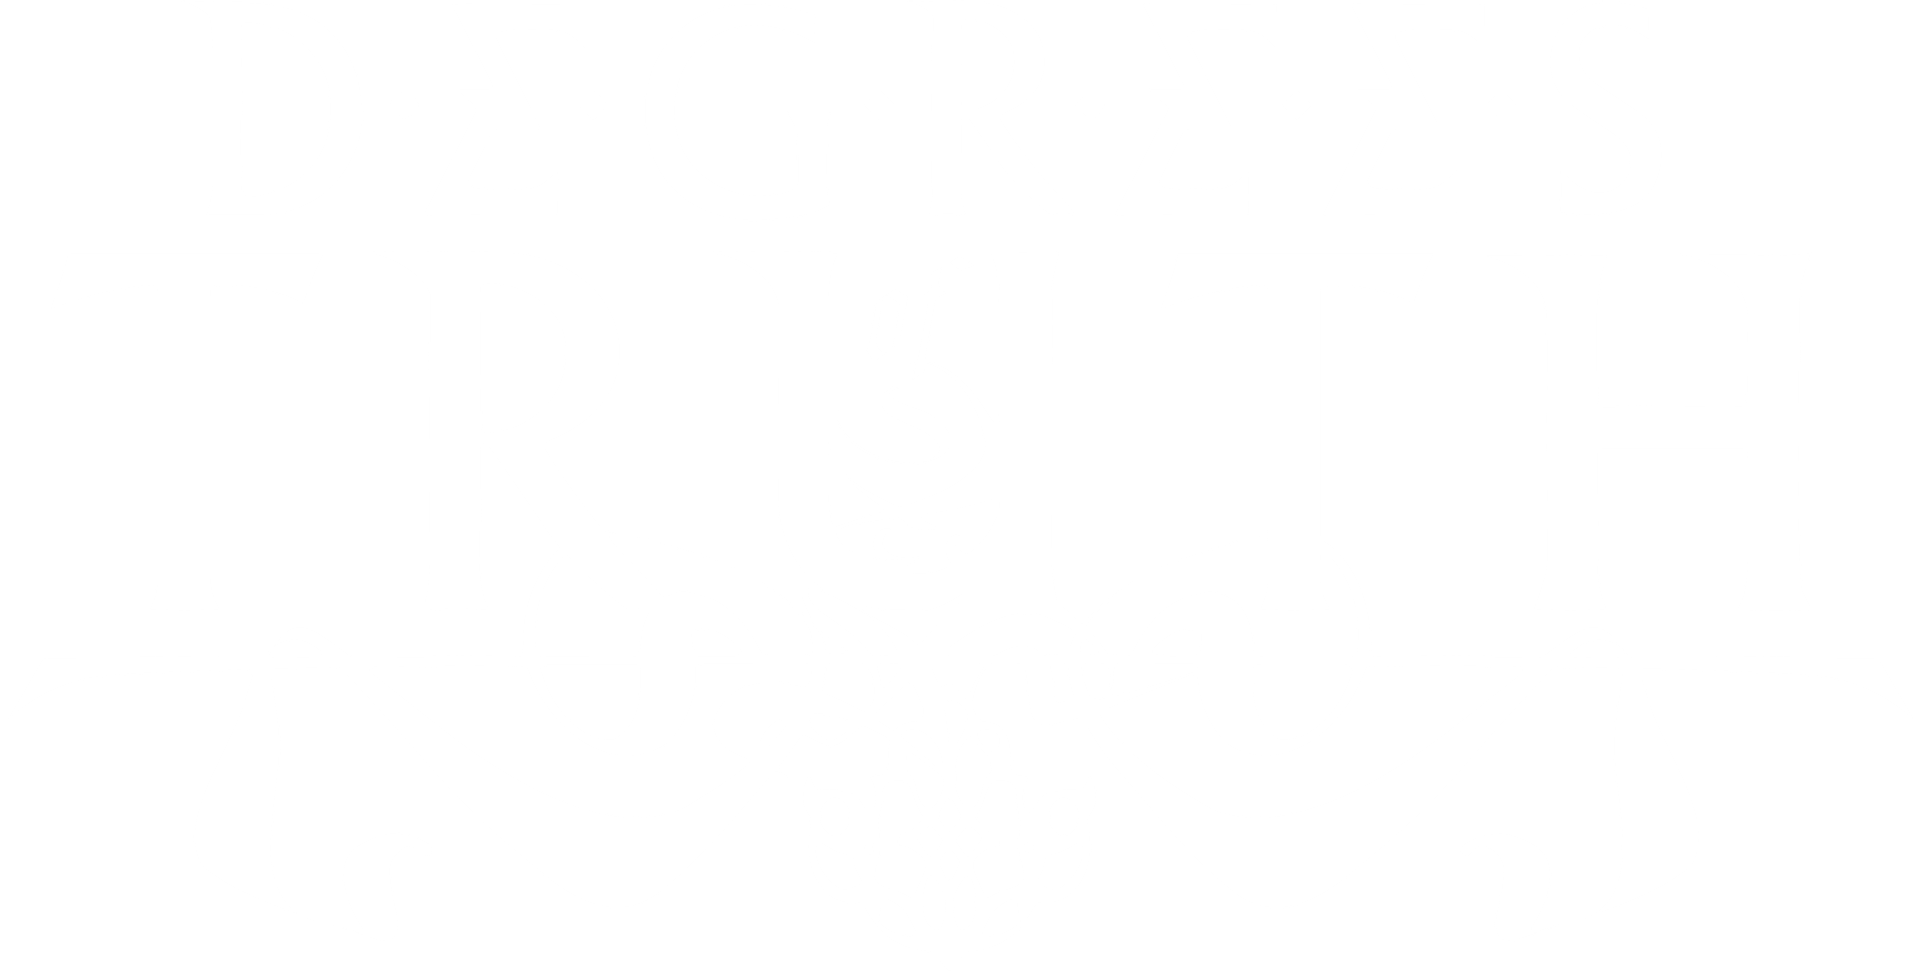 Degrees Of Truth (logo)